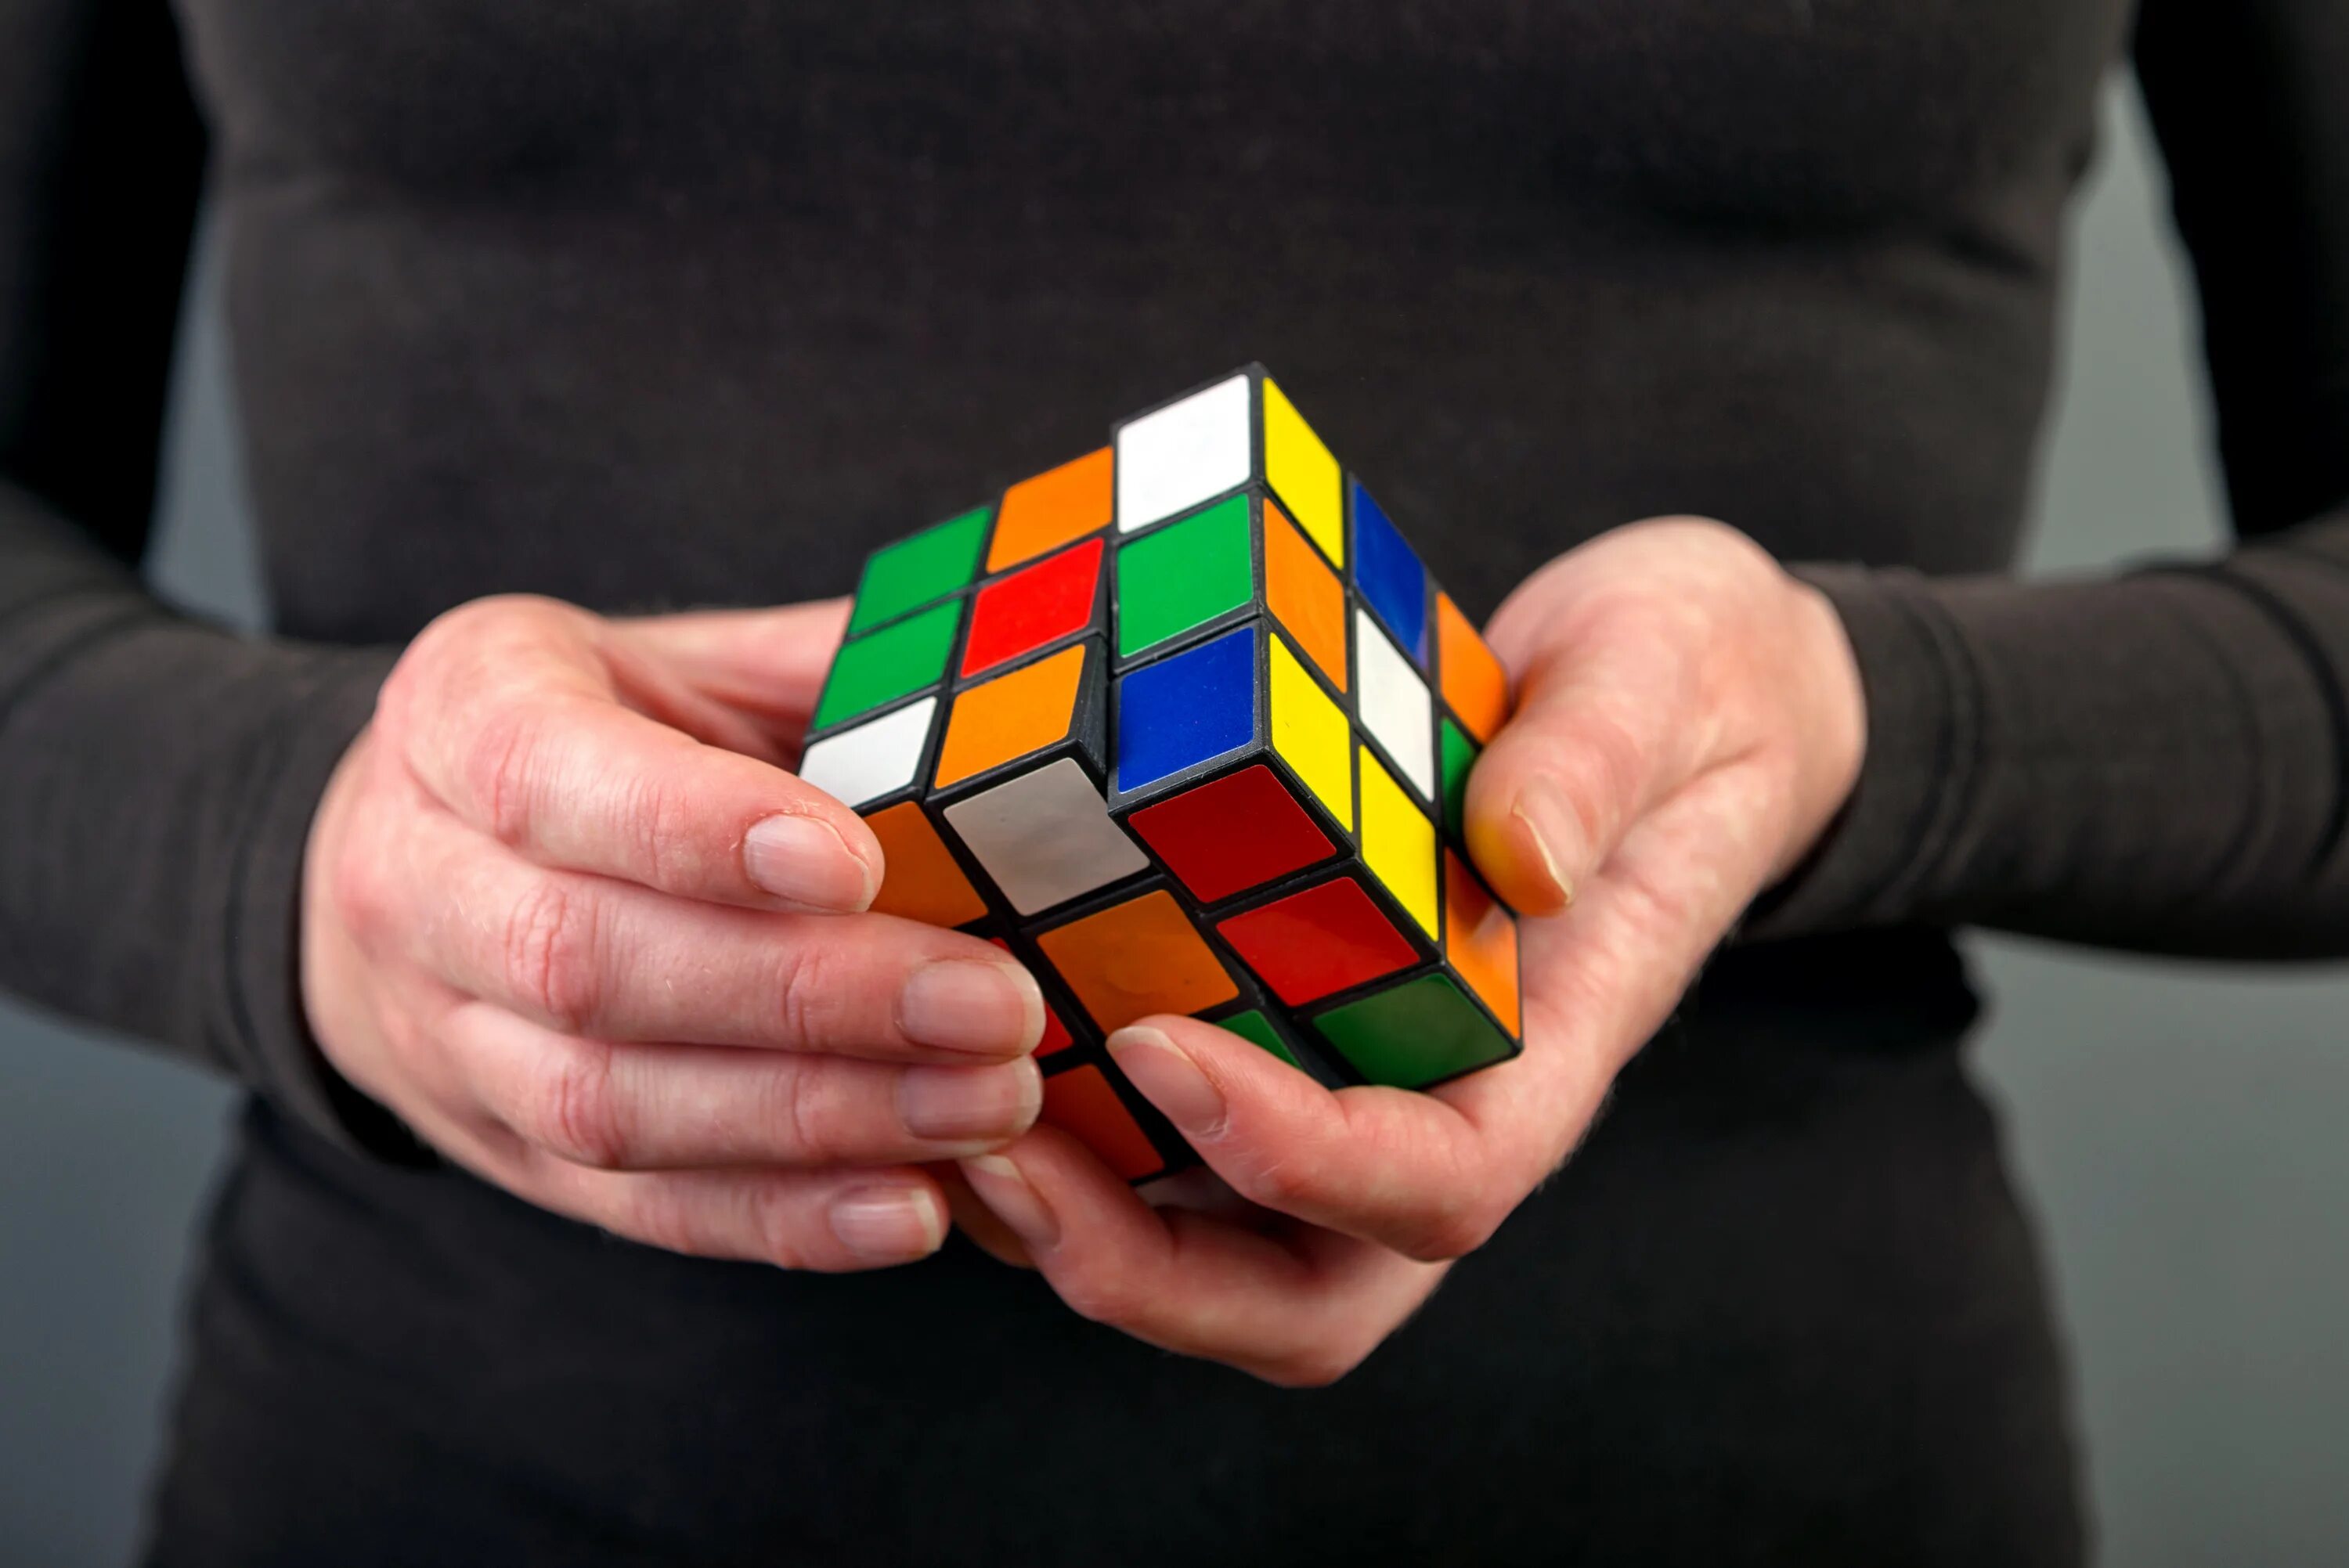 Включи рубик. Кубик Рубика в руках. Рука с кубиками. Человек с кубиком Рубика. Собранный кубик Рубика в руках.